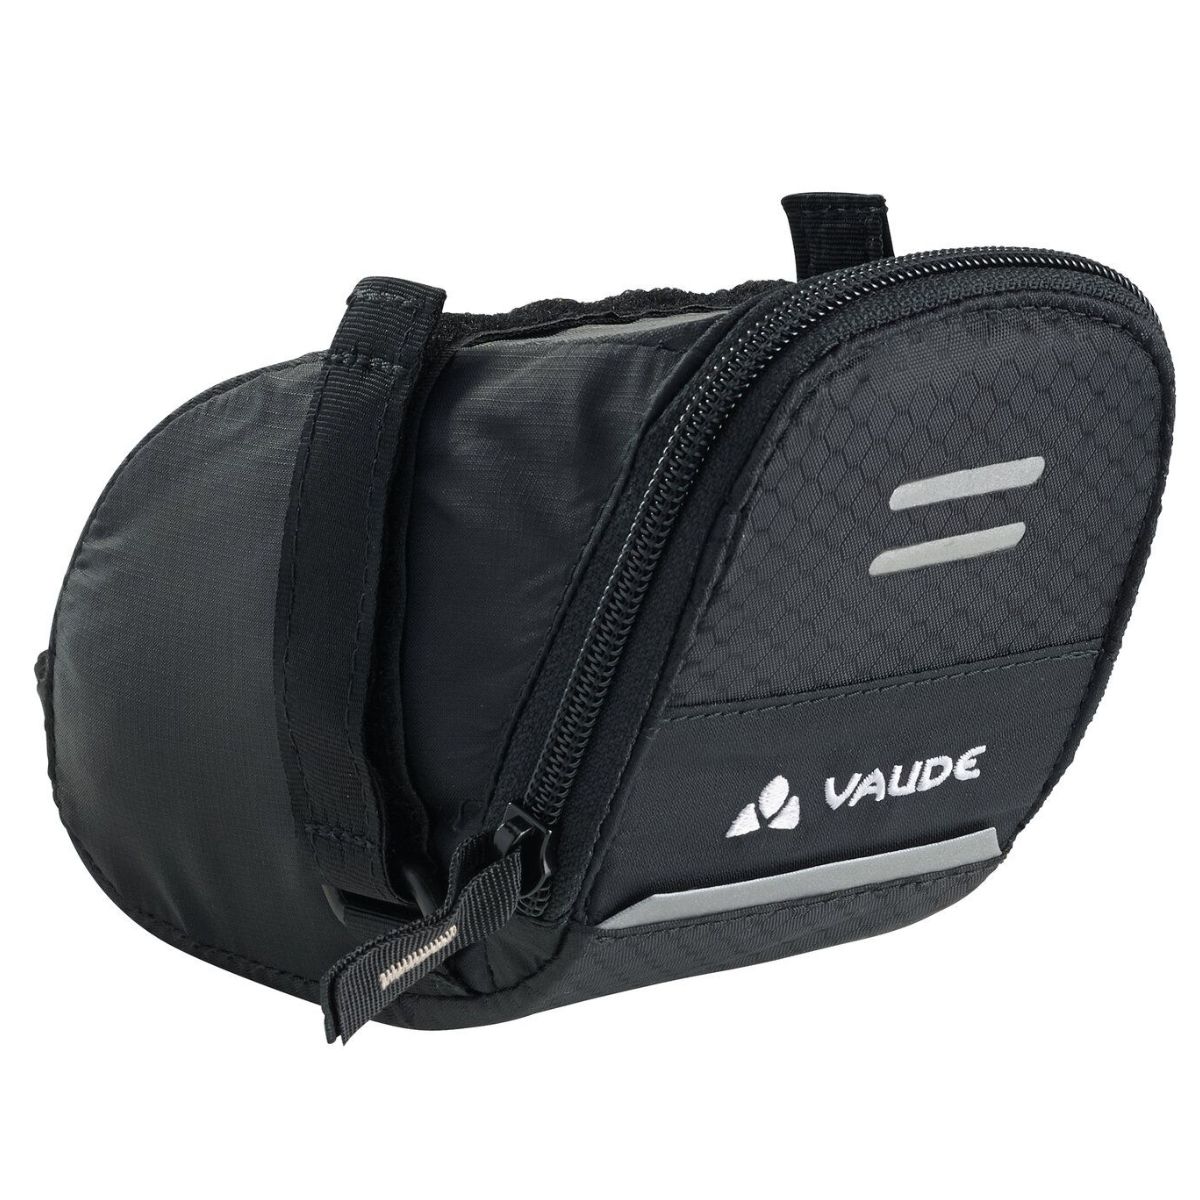 Vaude Race Light 2XLarge Seat Bag - Black